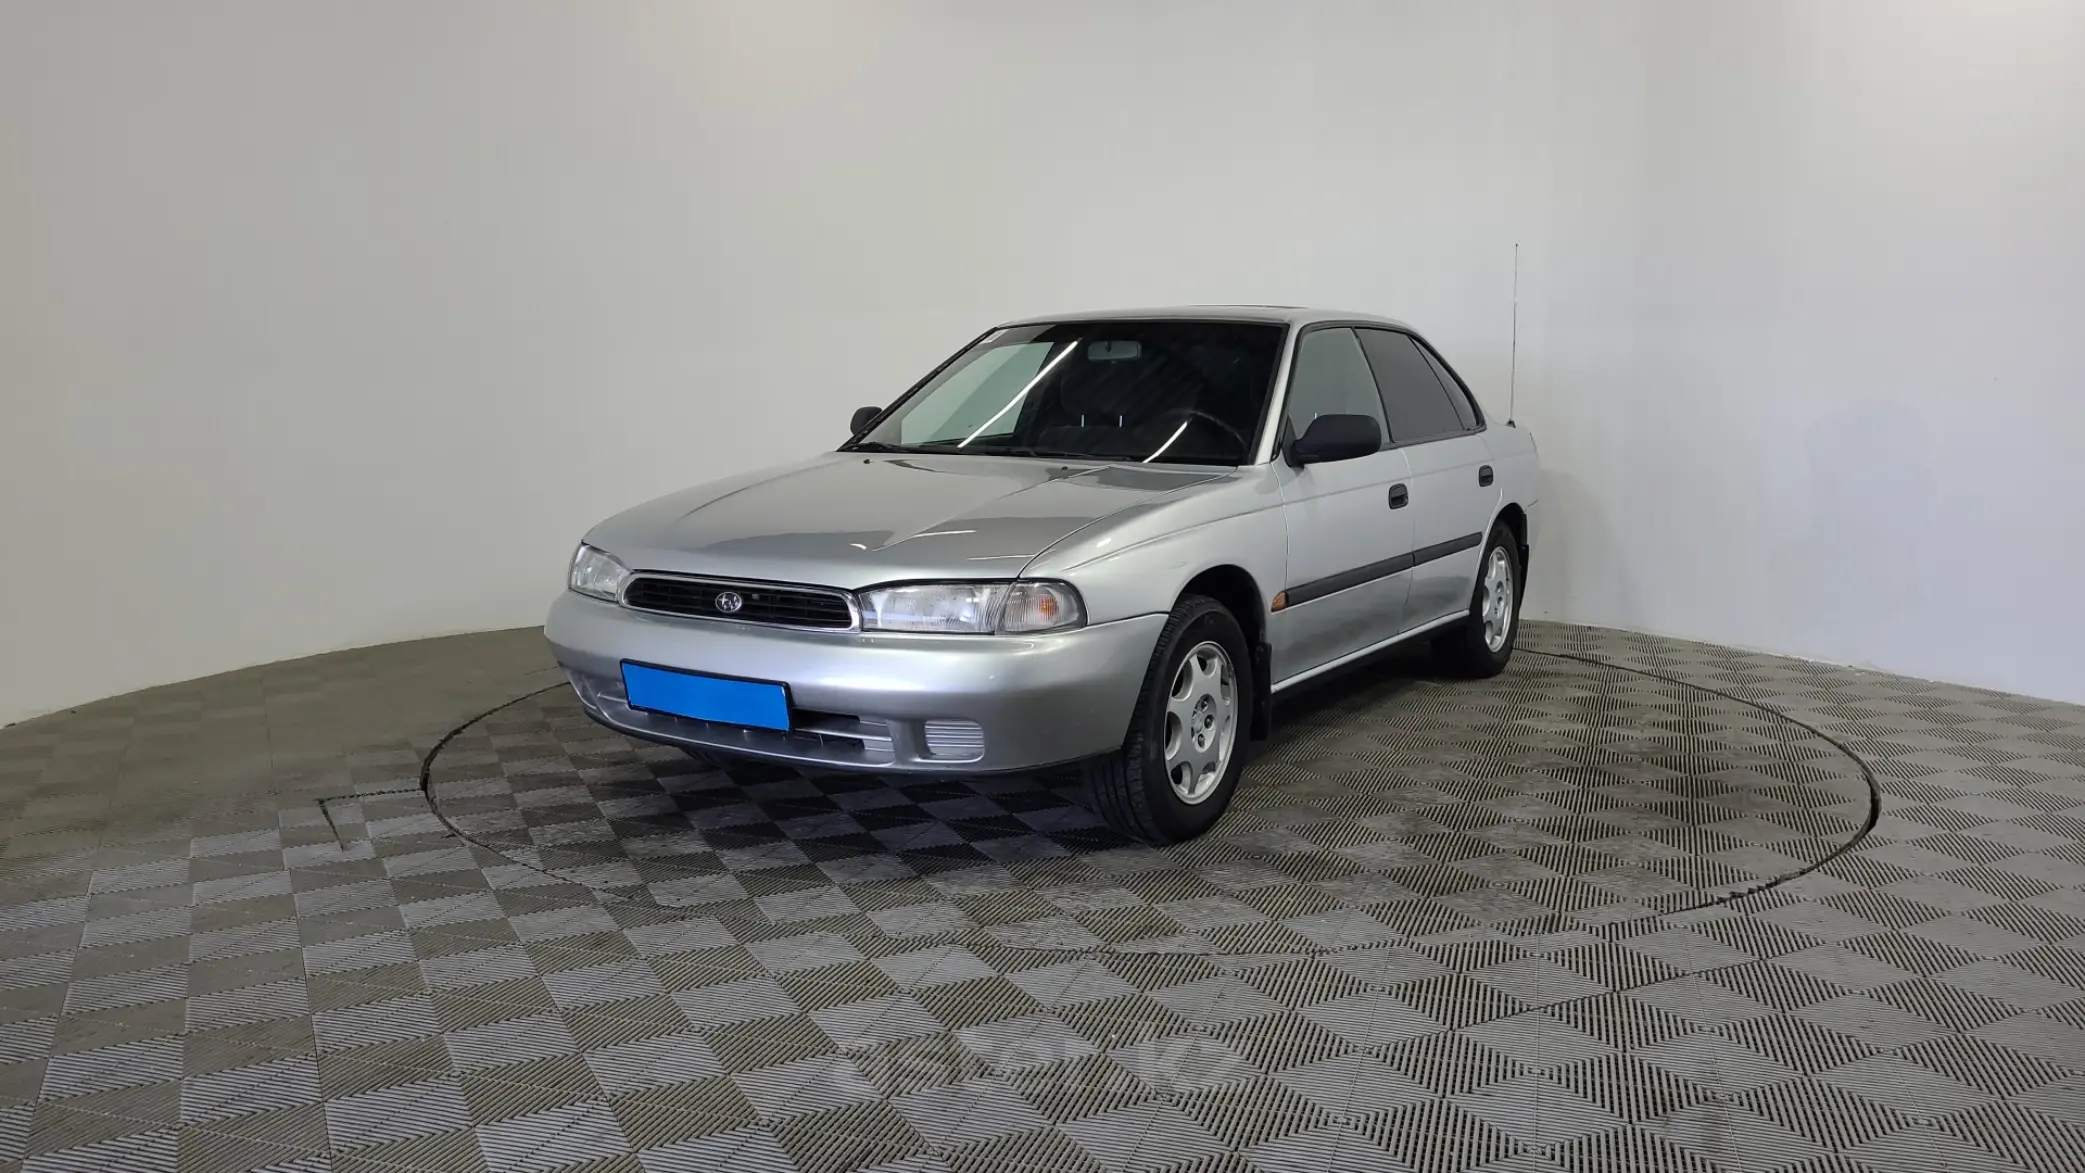 Subaru Legacy 1997г за 195 тыс руб в